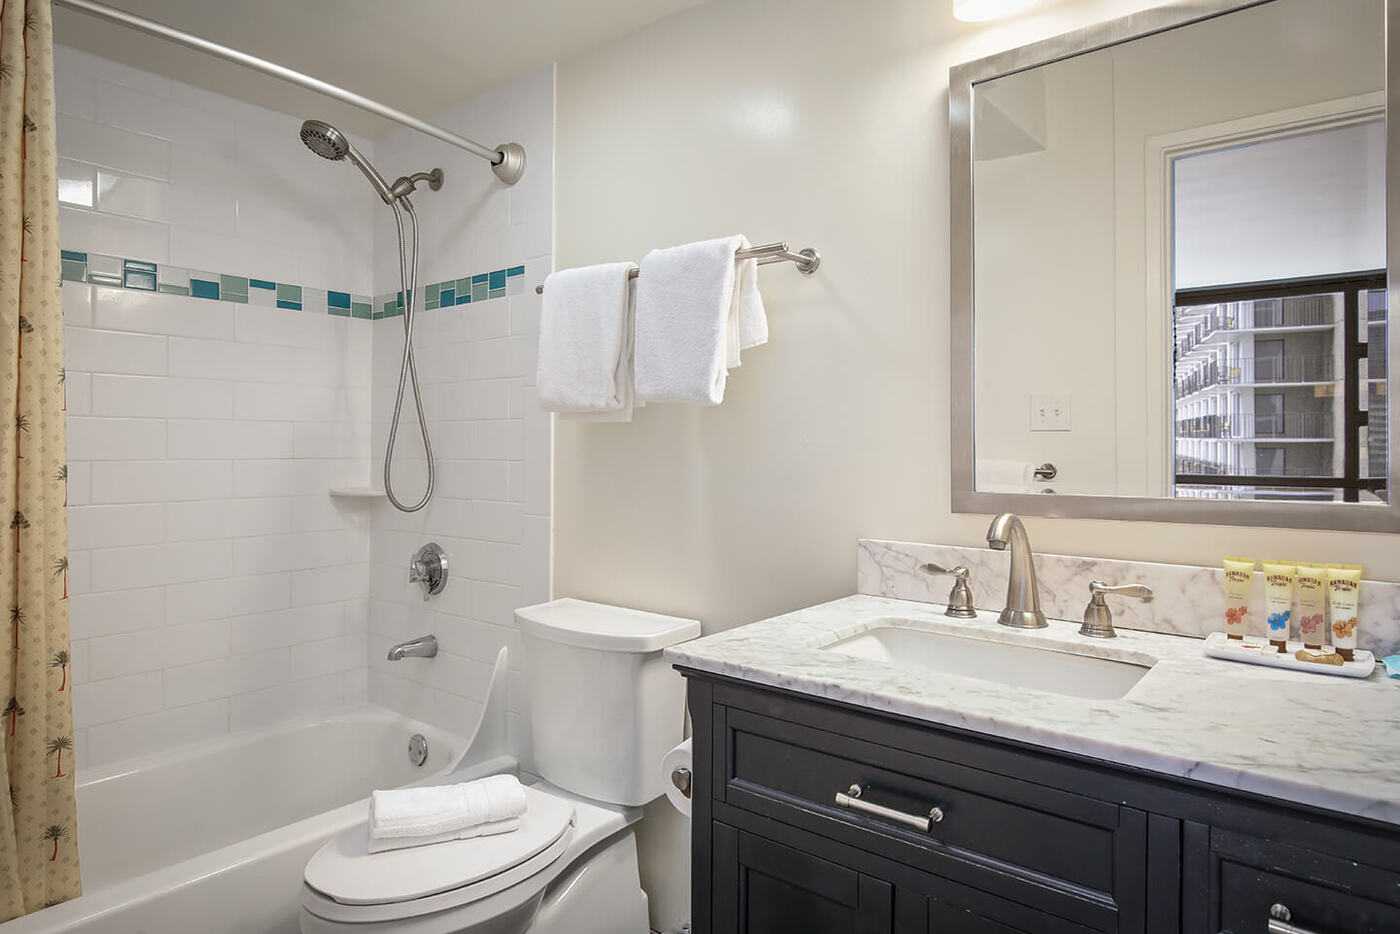 1-Bedroom Standard Suite bathroom with sink, shower/bathtub combo, and toilet.